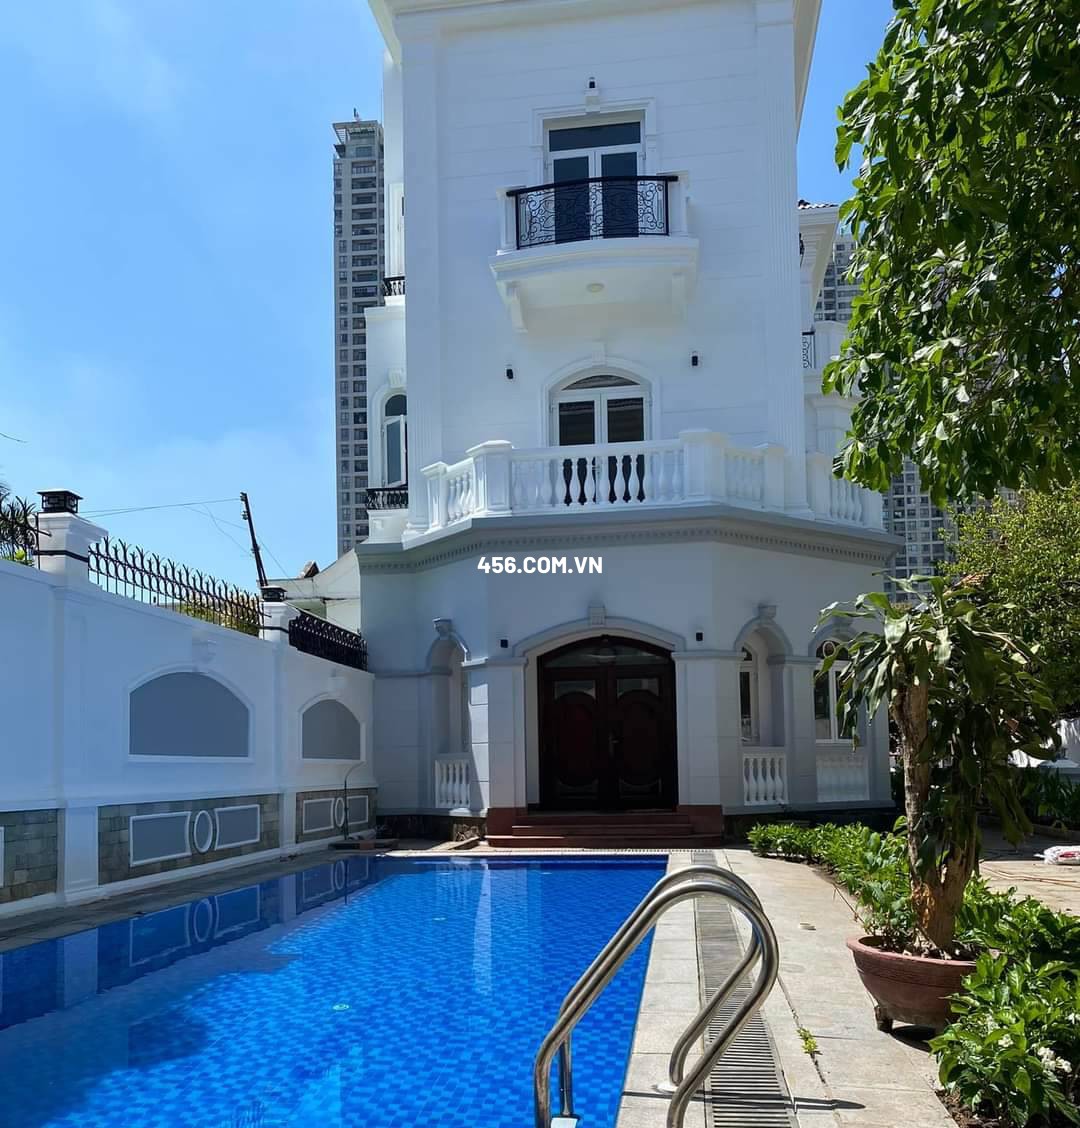 Brandnew Villas Thao Dien with big pool for...